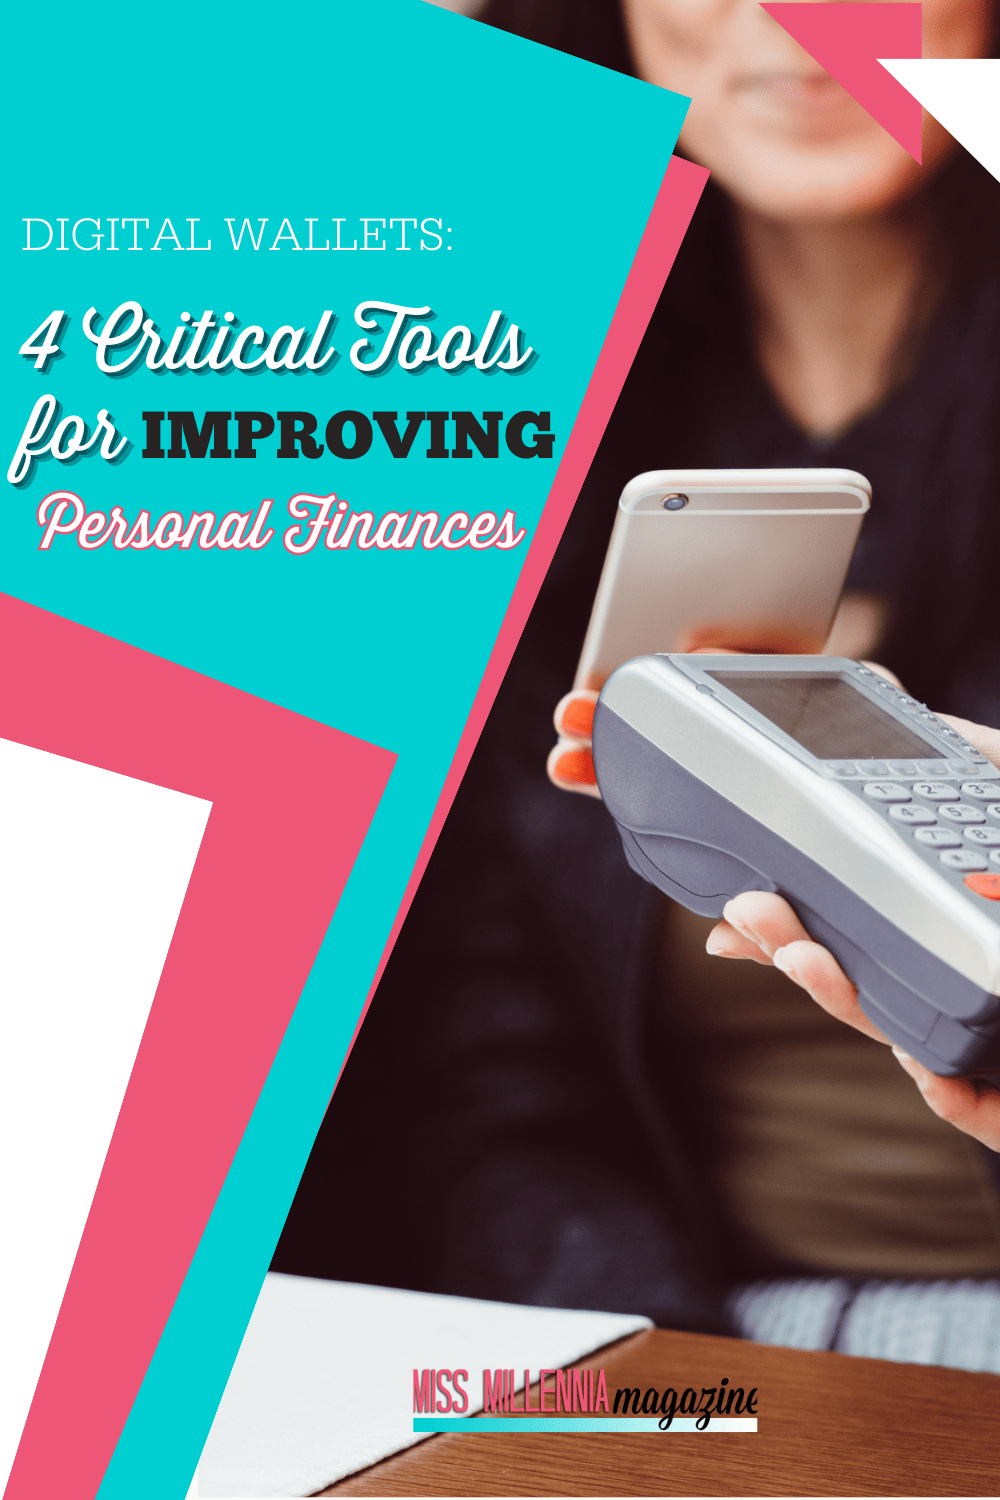 Digital Wallets: 4 Critical Tools for Improving Personal Finances